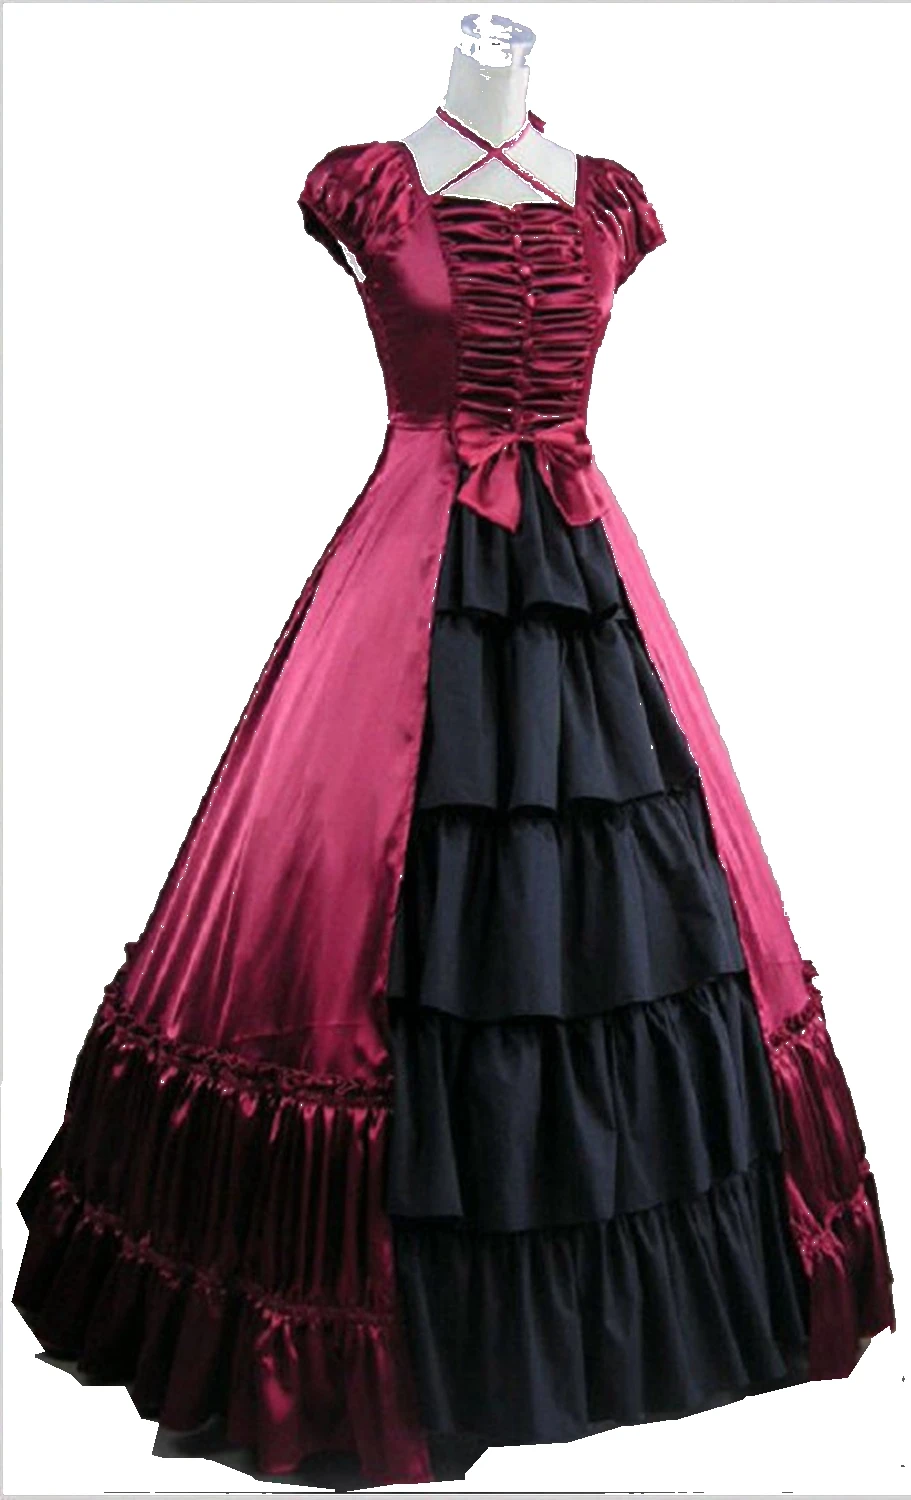 Girls' Lolita Victorian Prom Dress Civil War Southern Belle Ball Gown 2 Colors